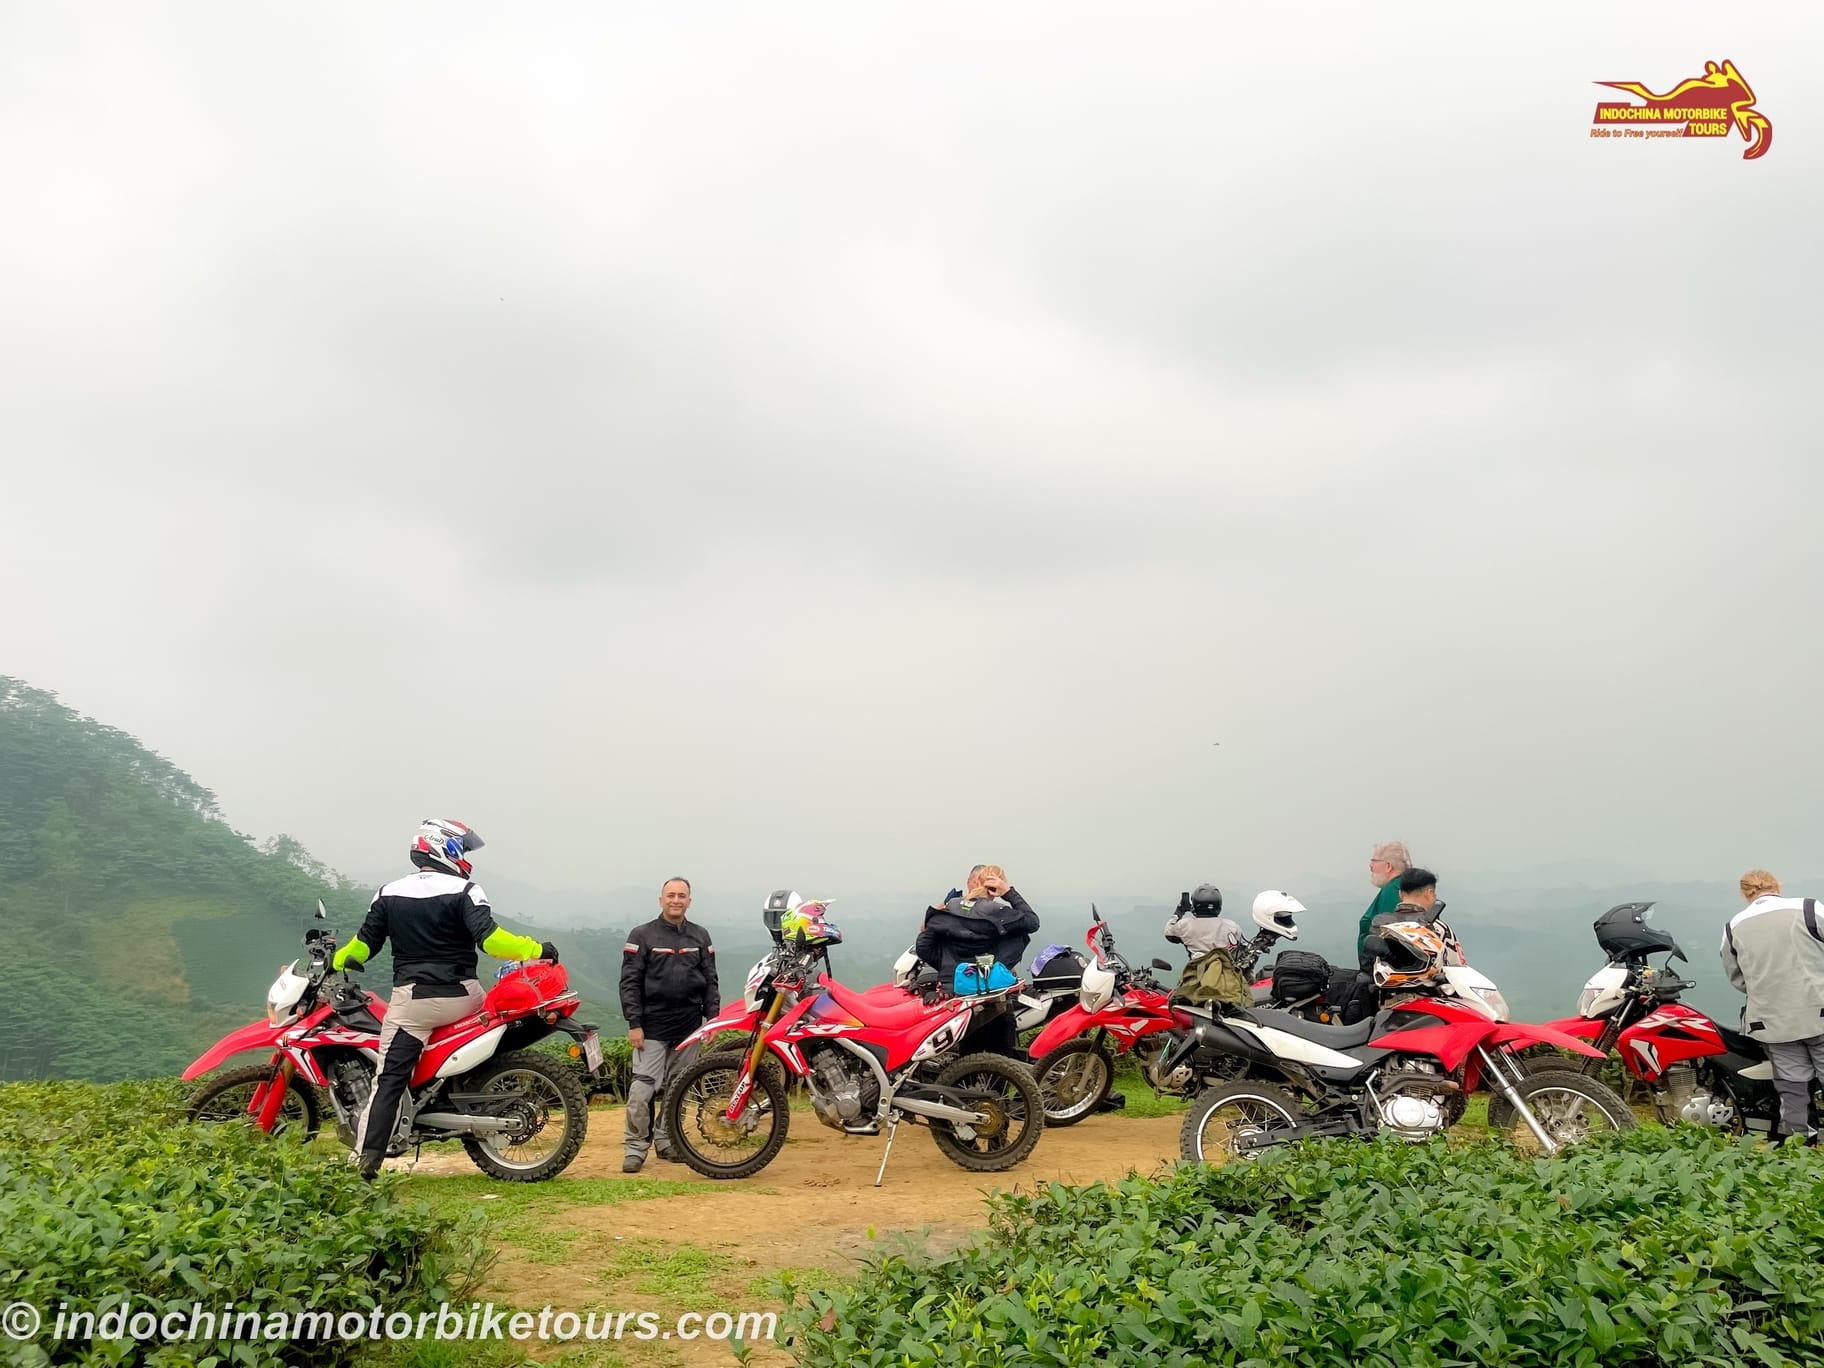 VIETNAM MOTORBIKE TOUR TO MAI CHAU, CUC PHUONG NATIONAL PARK, HOA LU, TAM COC